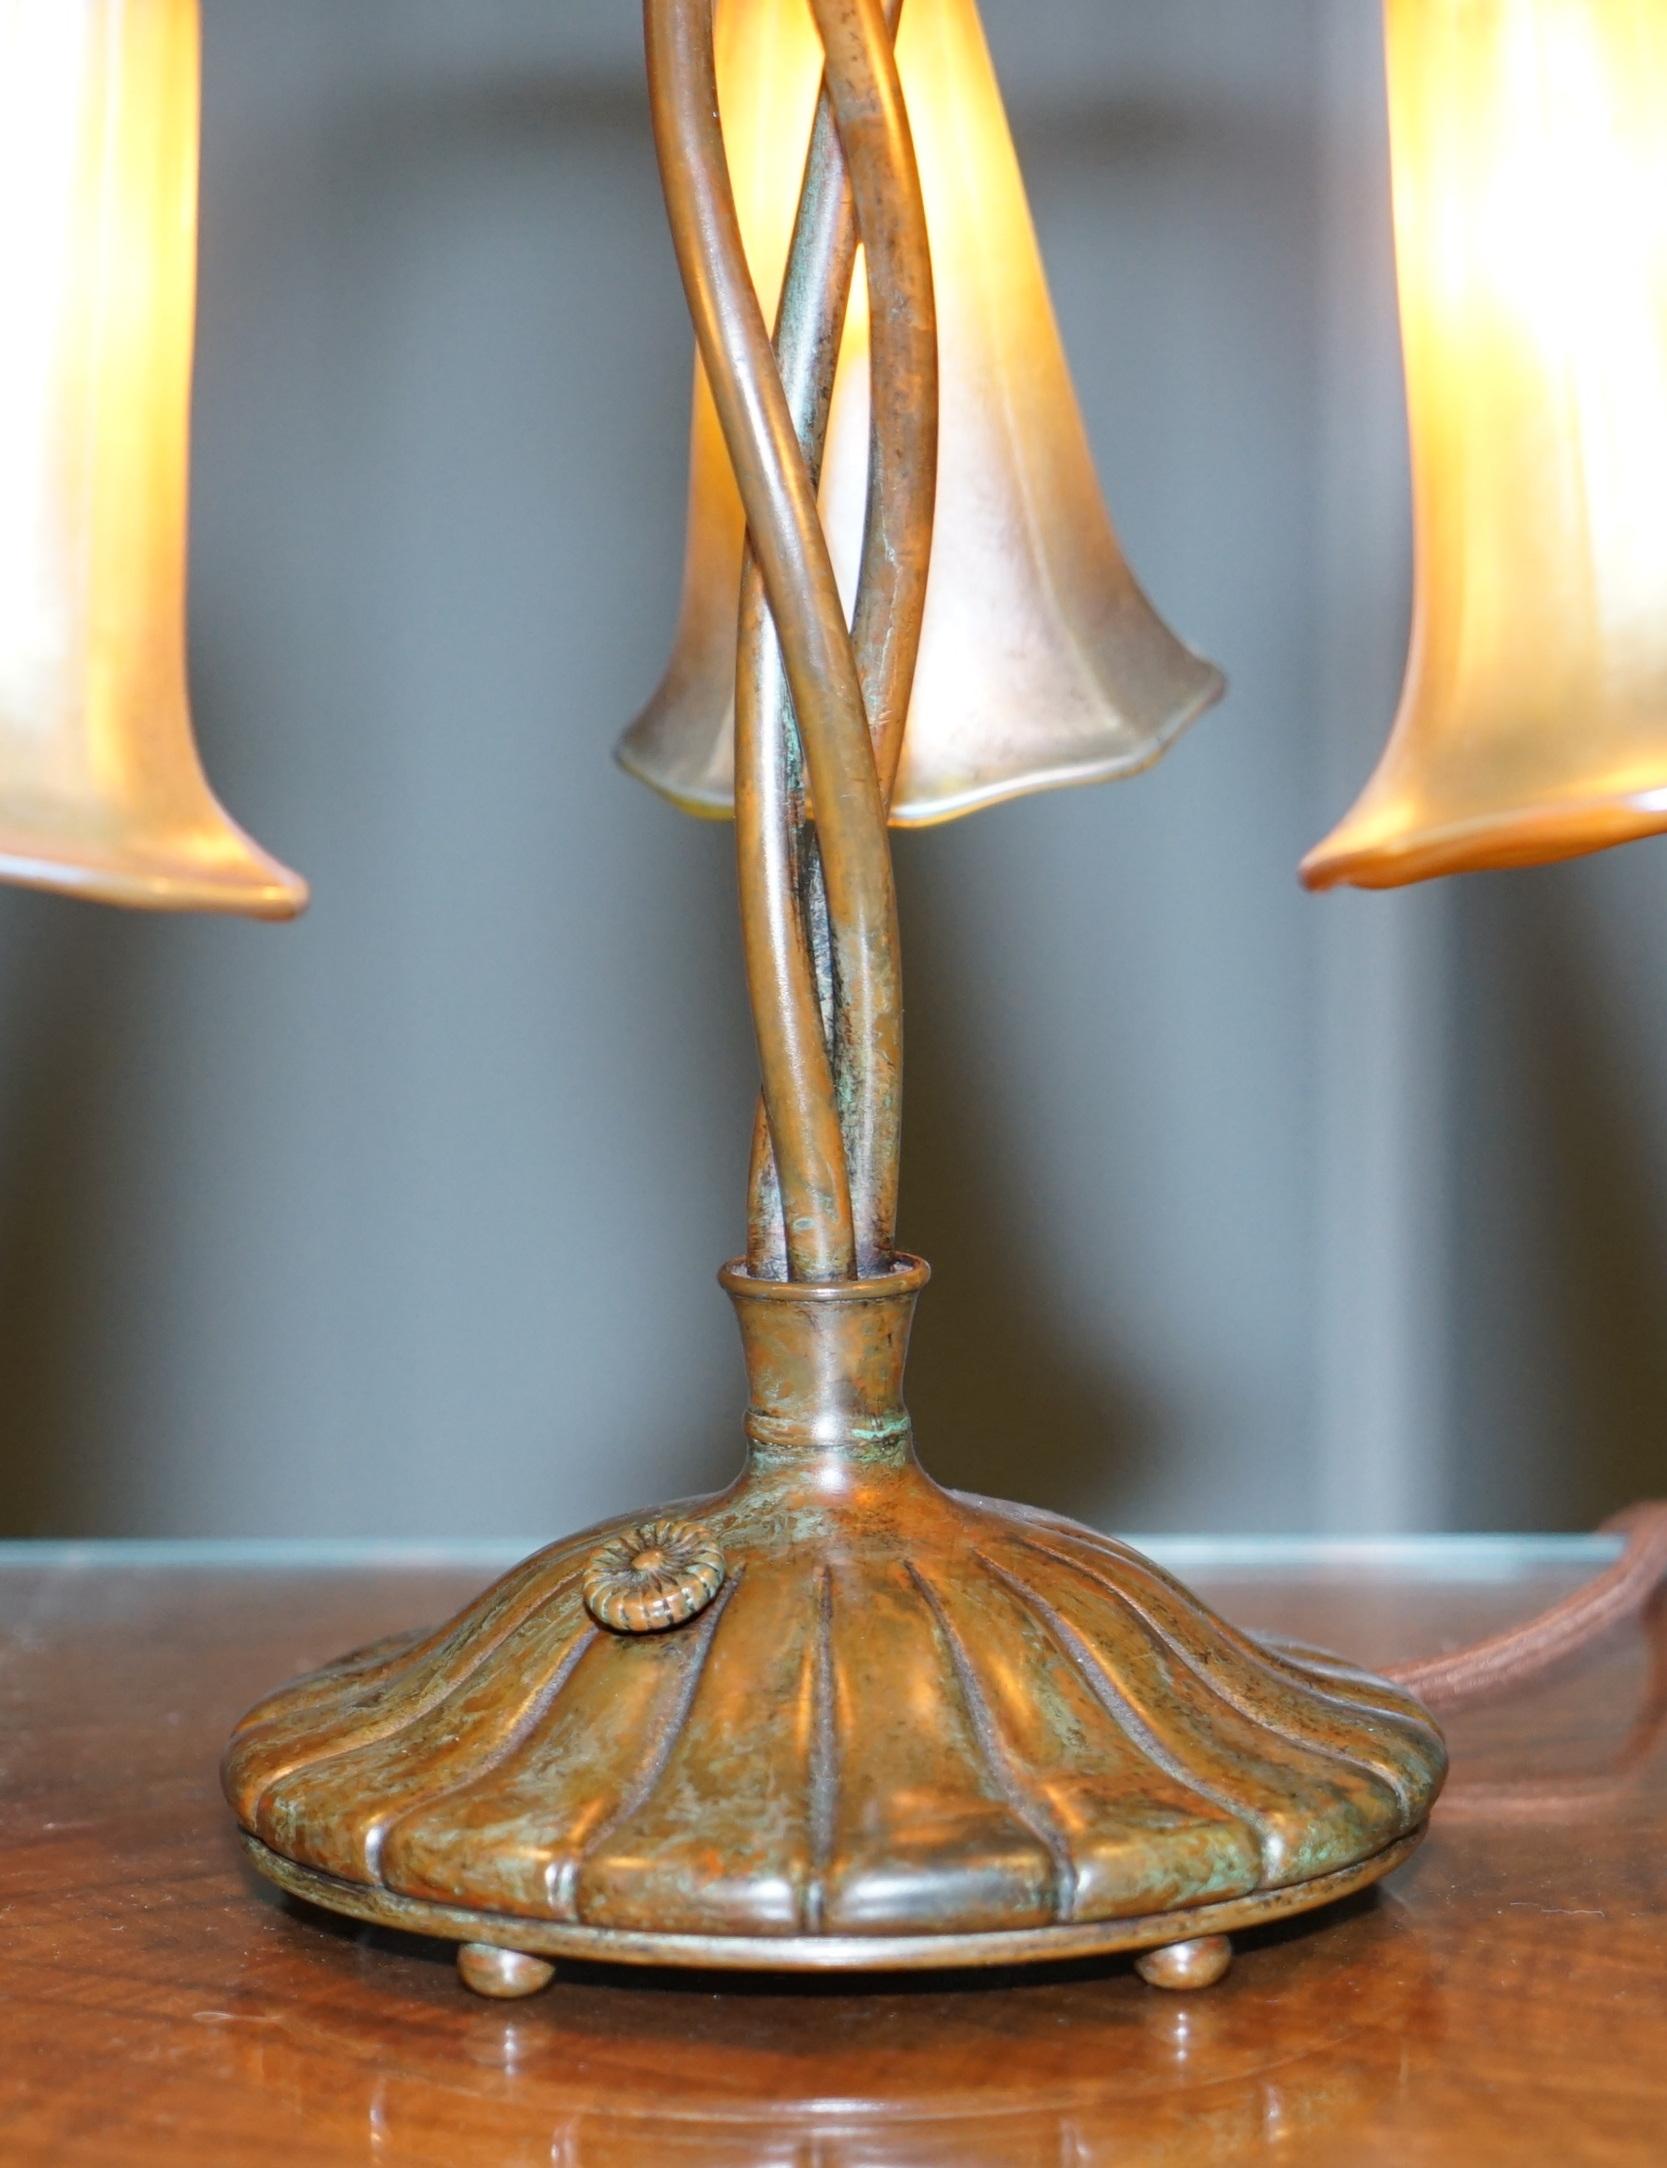 American Rare Pair of Original Tiffany Studios Lamps Favrile Glass Shades Solid Bronze